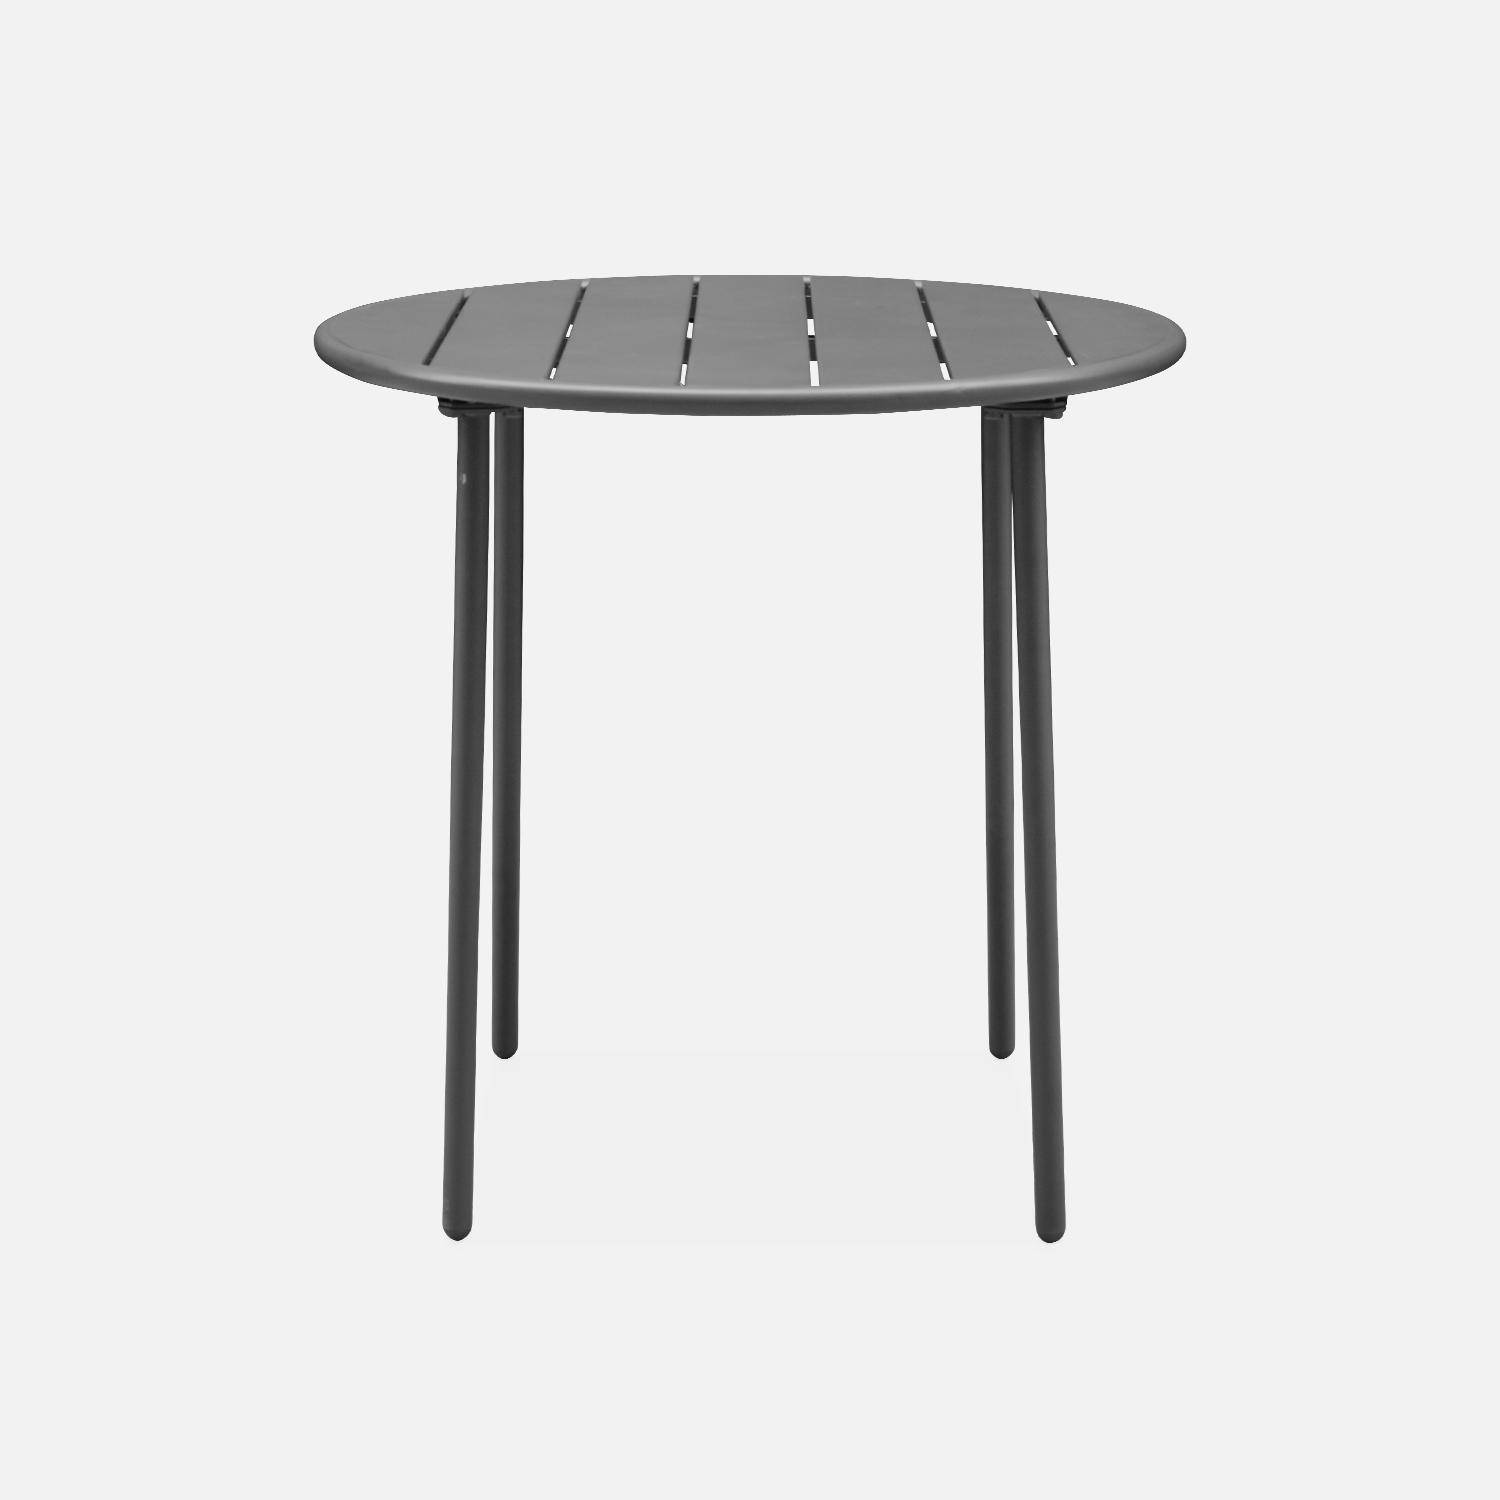 2-seater round steel garden table, Ø75cm - Amelia - Anthracite,sweeek,Photo5